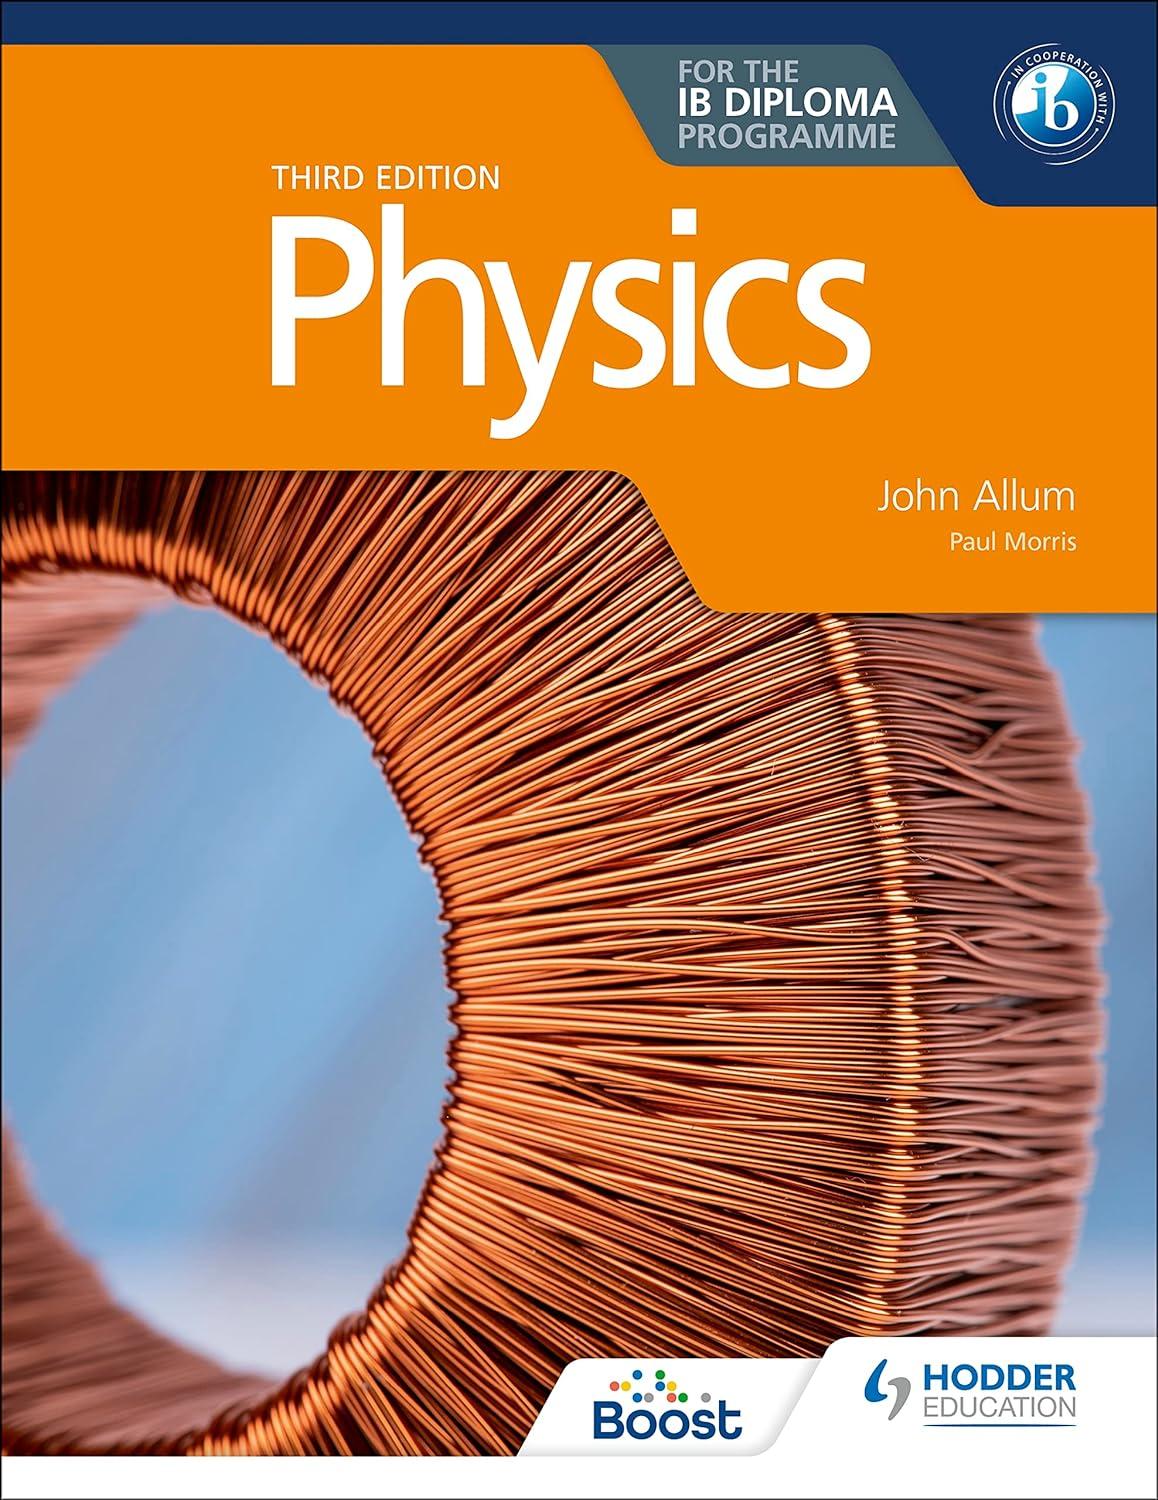 physics for the ib diploma 3rd edition john allum, paul morris 1398369918, 978-1398369917